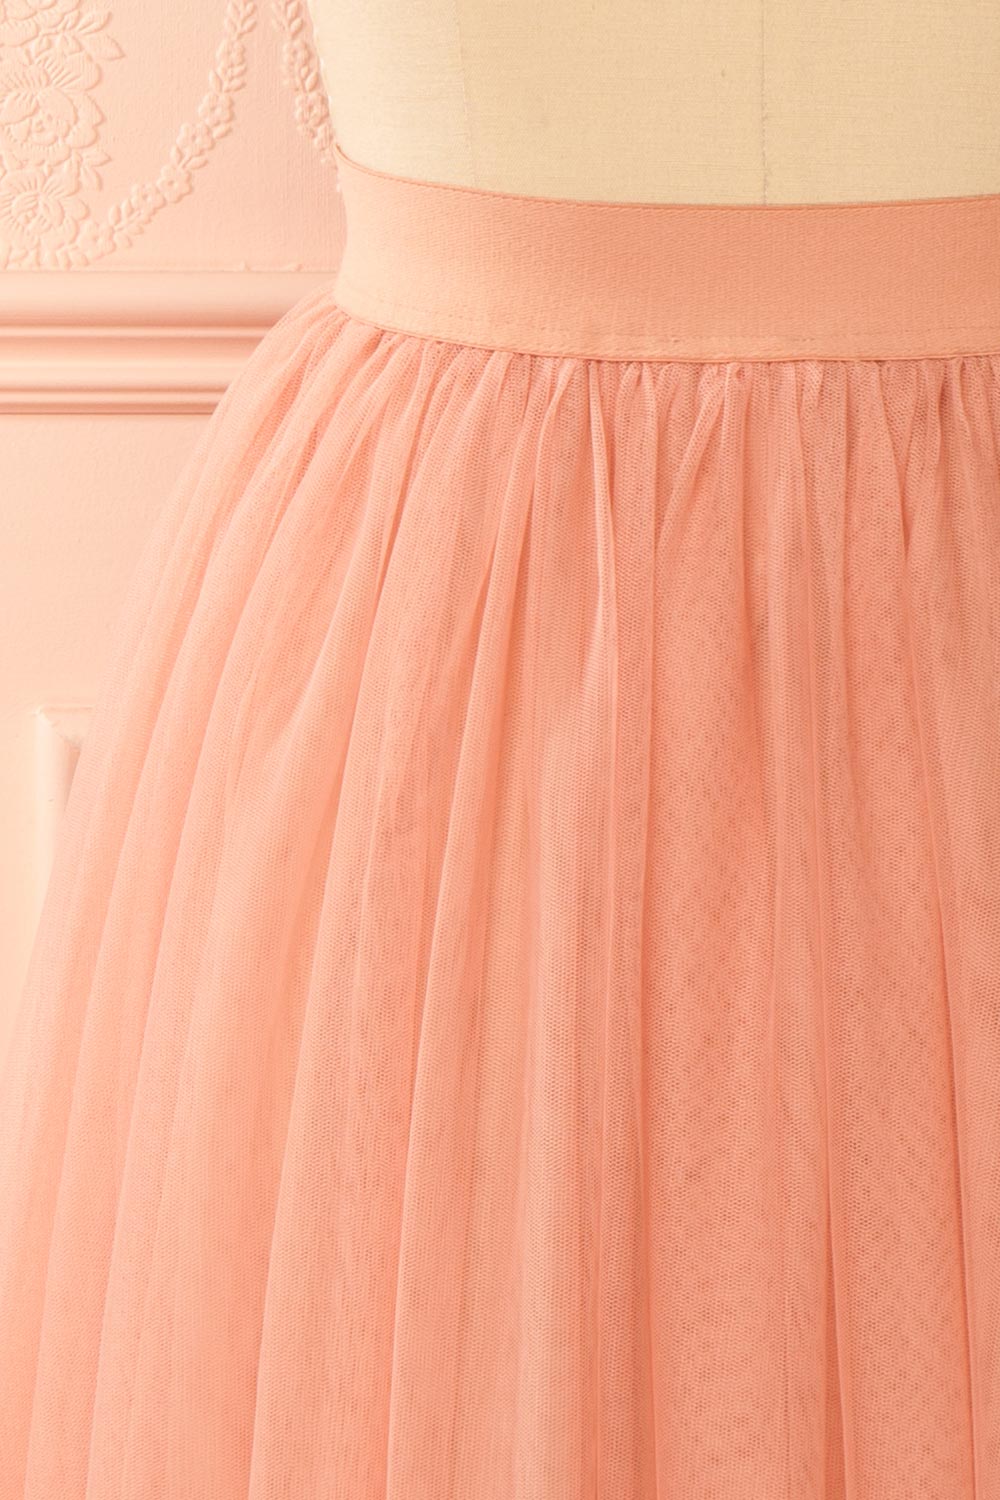 Aurelia Rose Light Pink Tulle Skirt | Boutique 1861 6